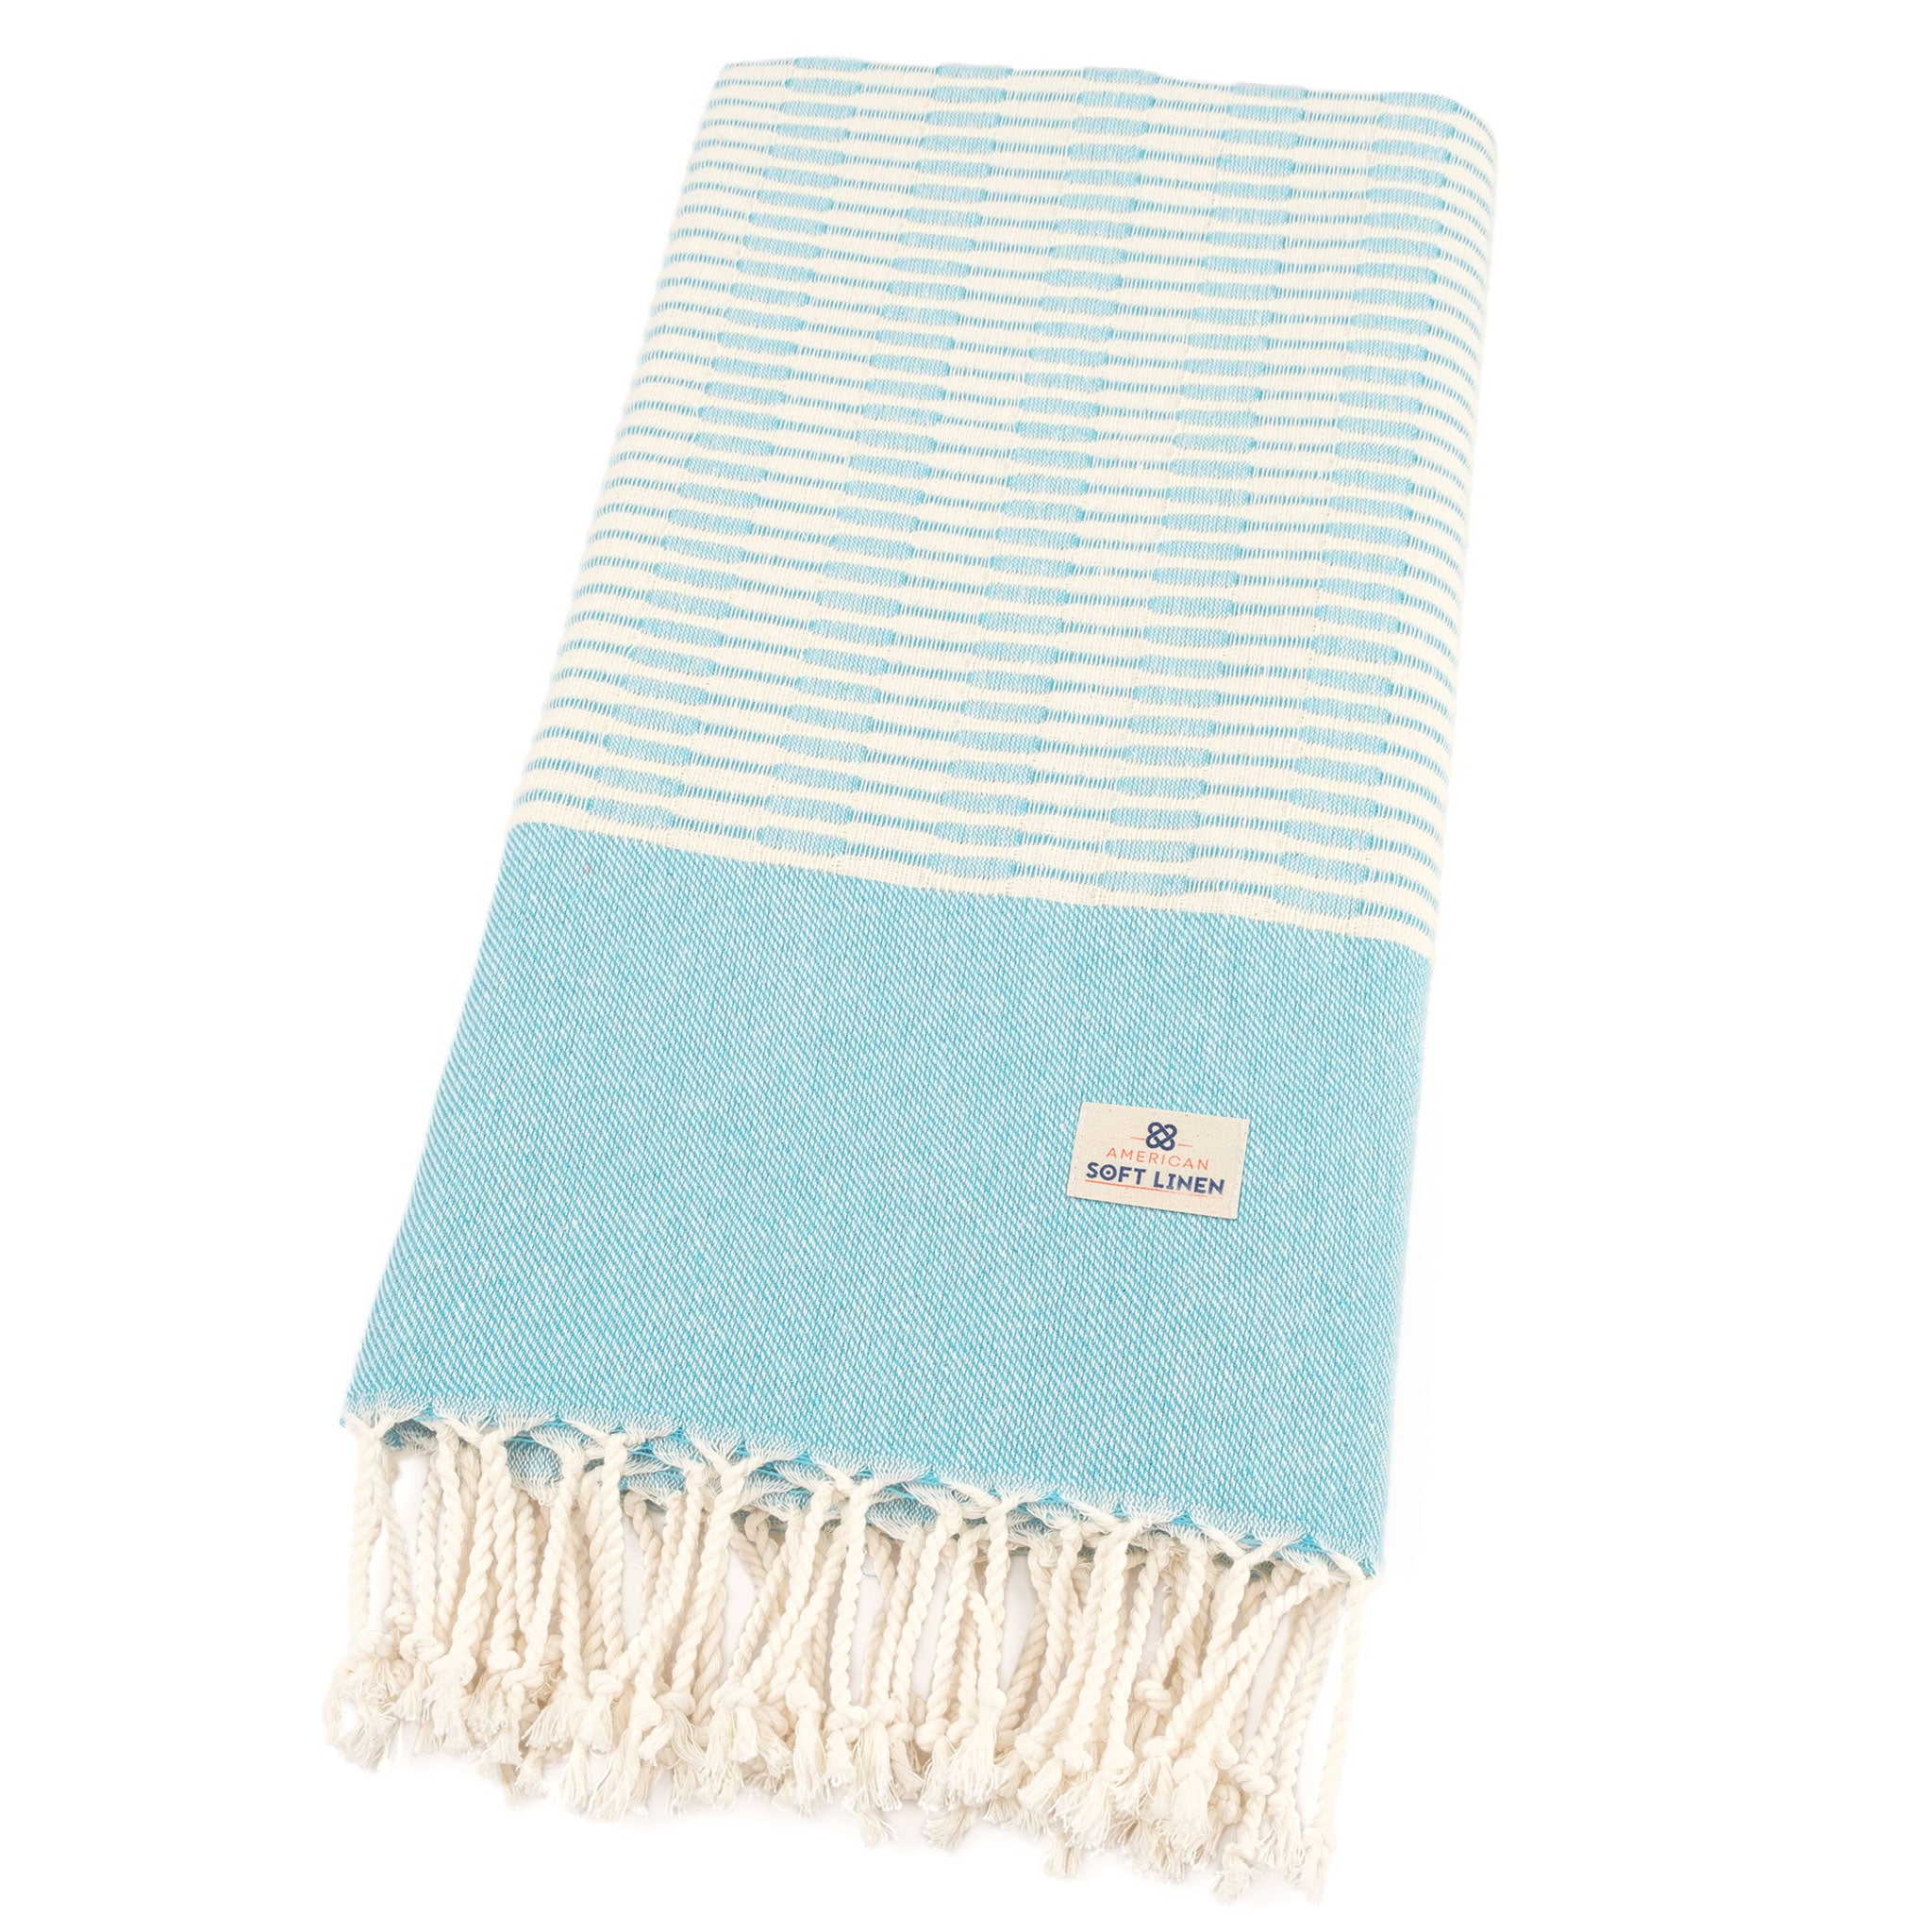 American Soft Linen - 100% Cotton Turkish Peshtemal Towels 40x70 Inches - Turquoise - 5